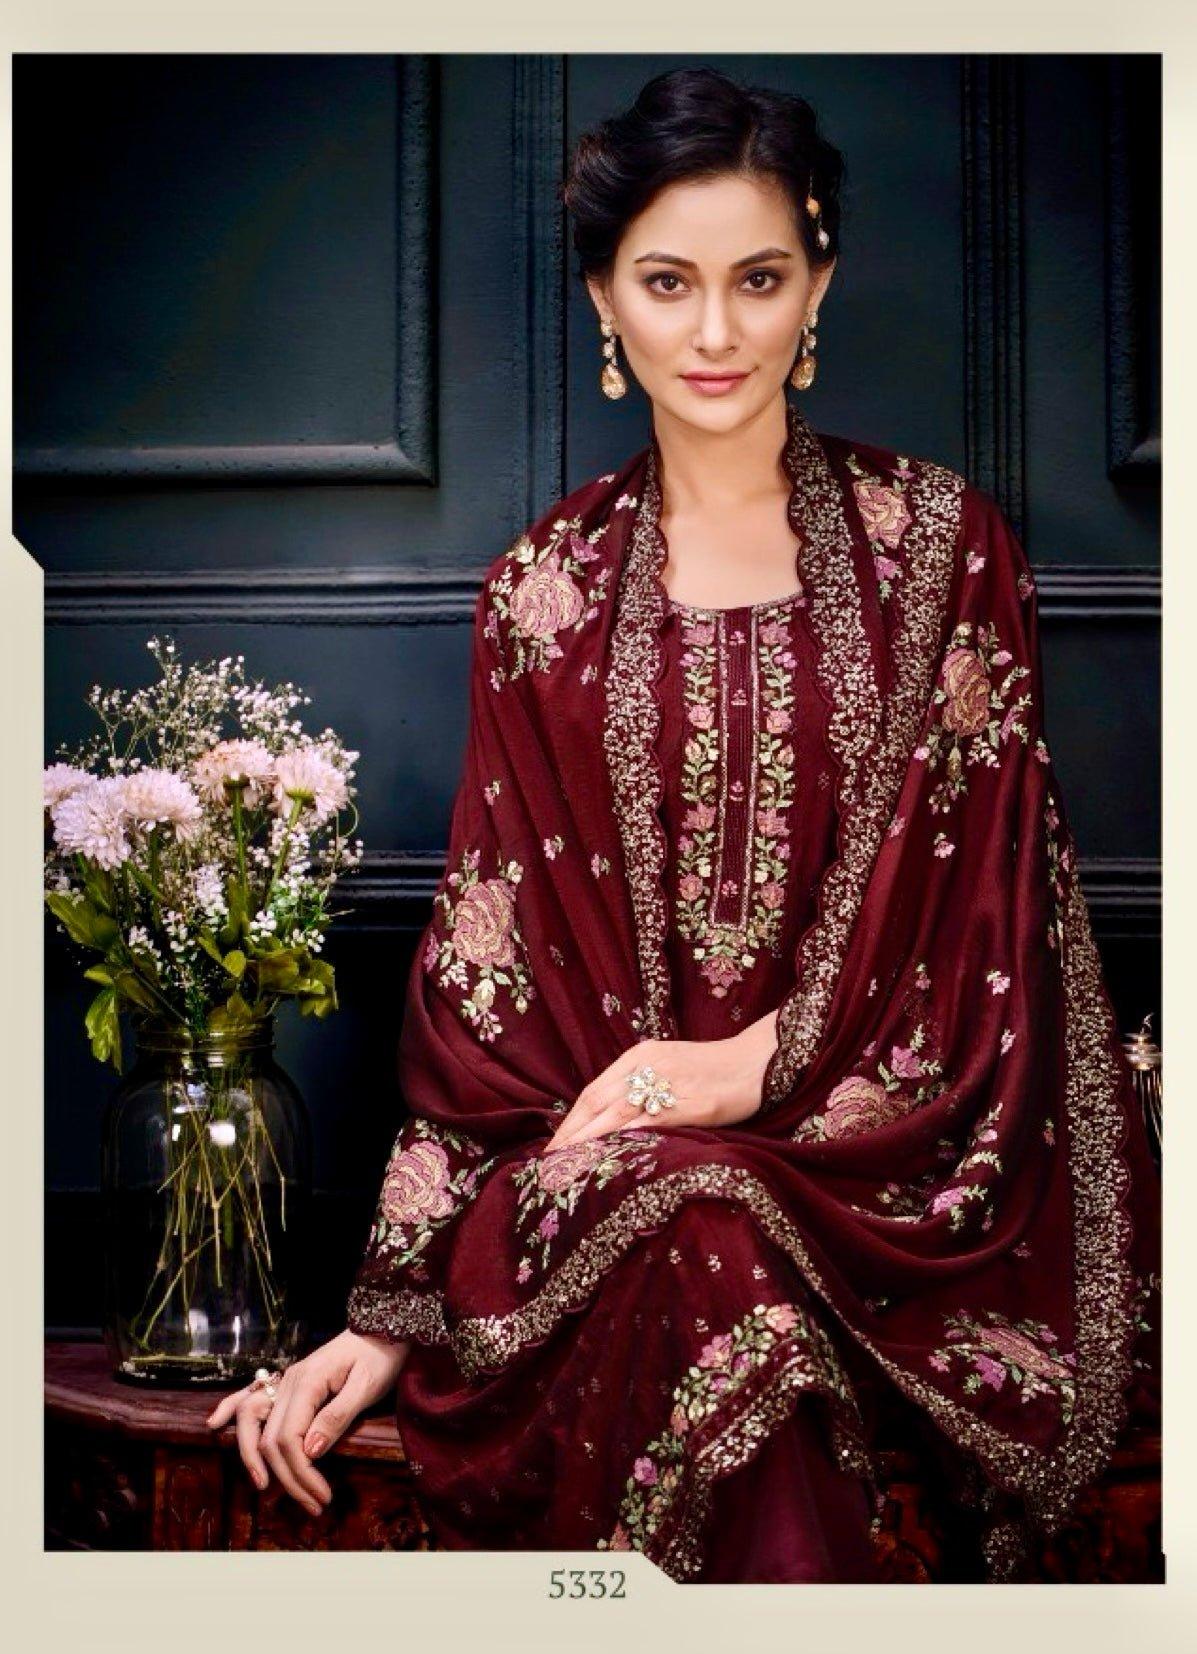 Indian premium quality heavy embroidery designer dress set, Indian/Pakistani wedding party wear Salwar kamiz suit dress with Dupatta, M - Diana's Fashion Factory